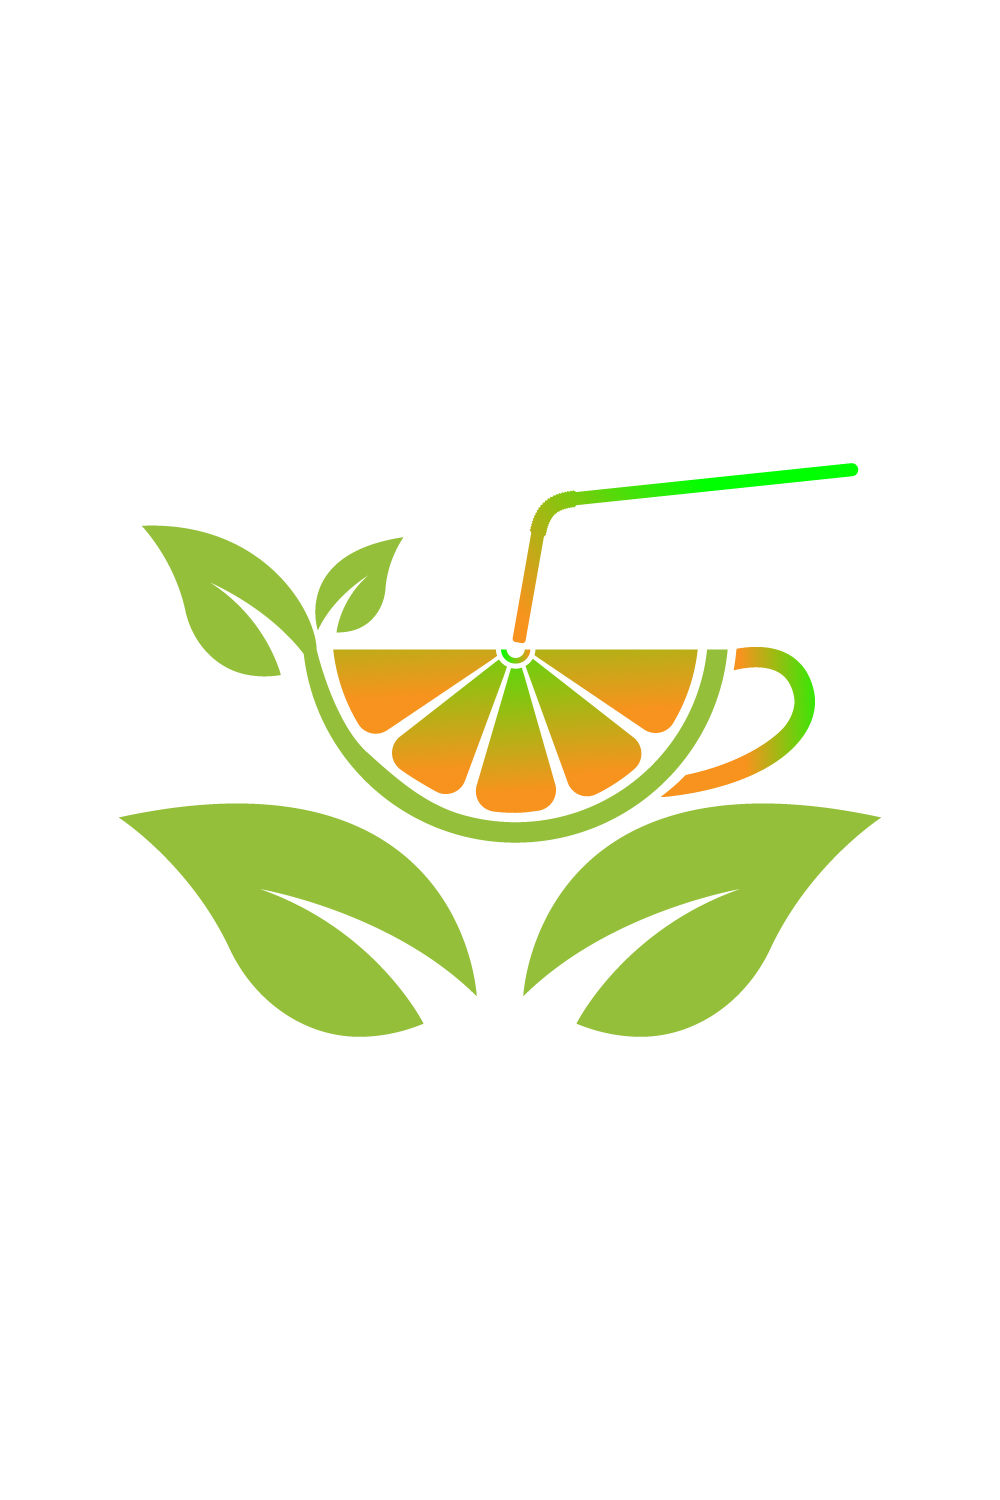 Lemon juice logo design vector images lemon Fresh Fruit logo template icon design pinterest preview image.